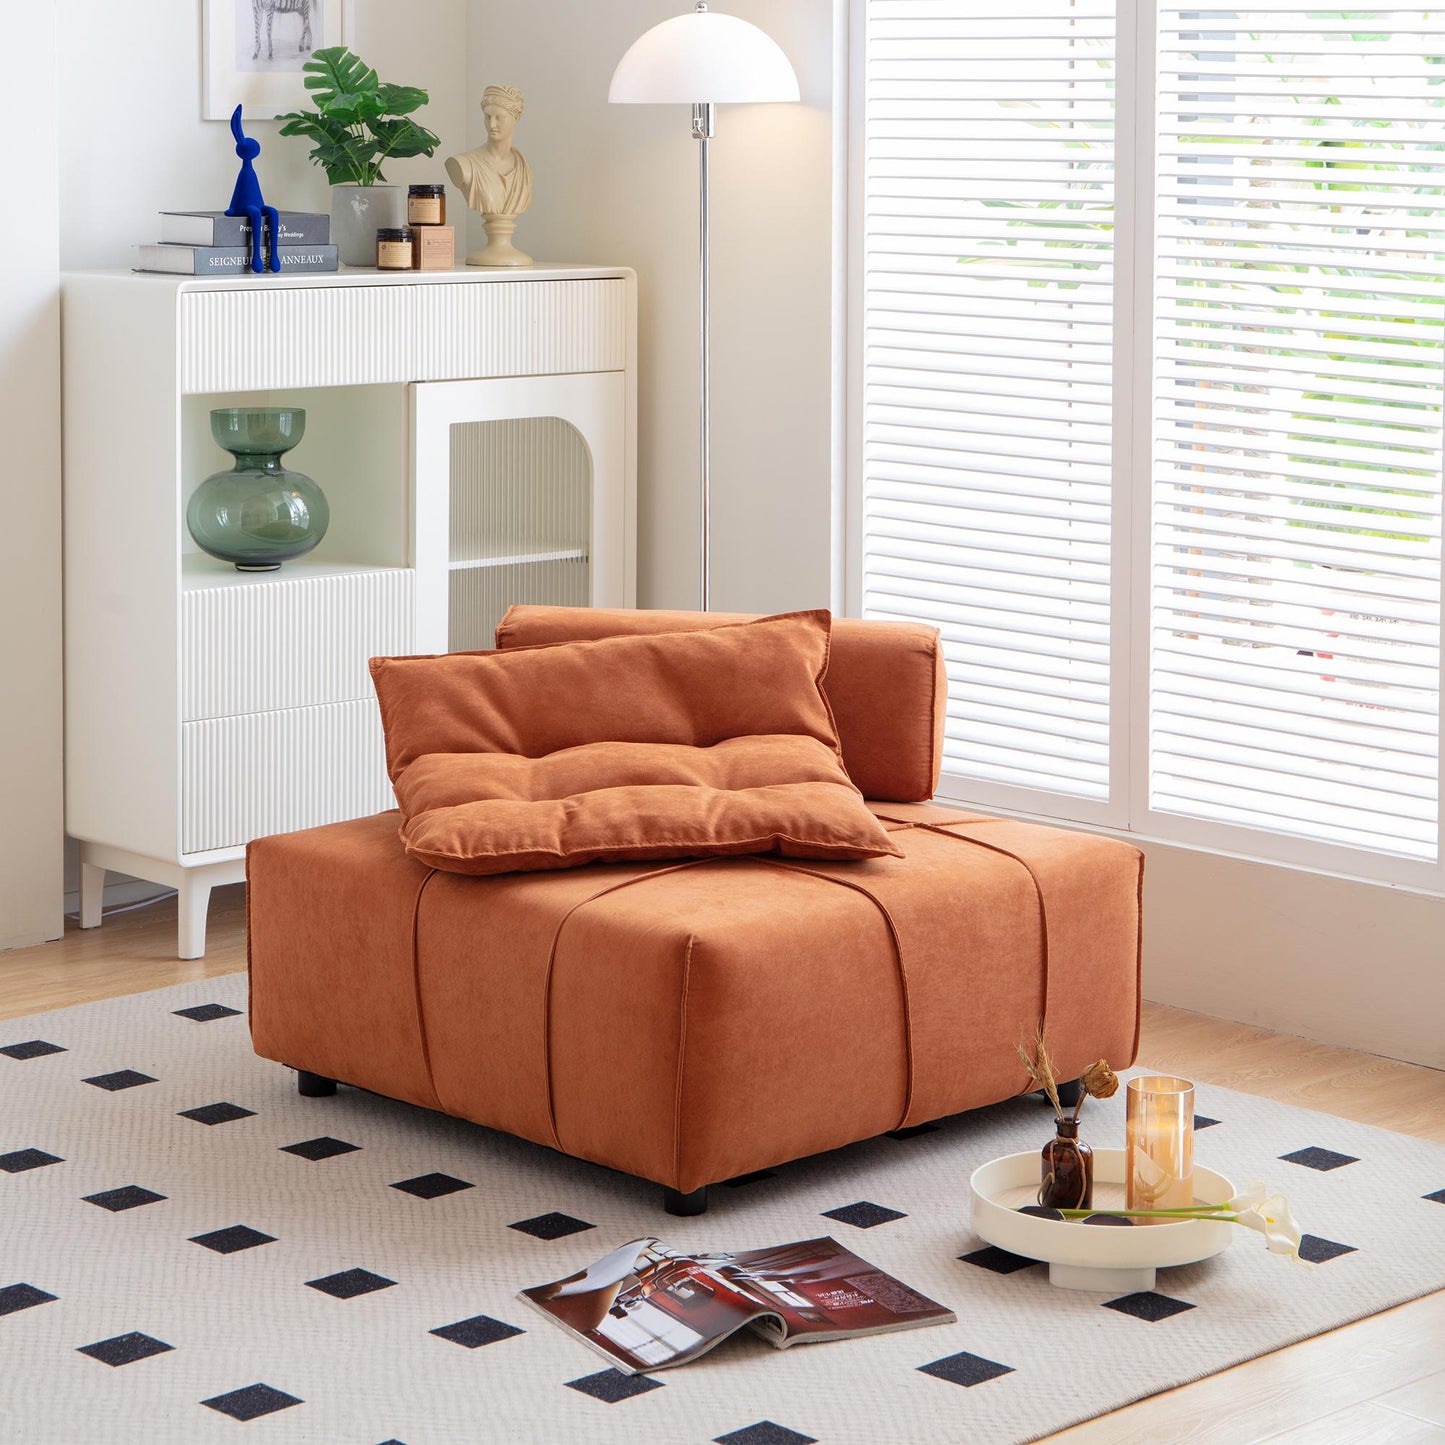 LAST™ Modular Sectional Single Sofa